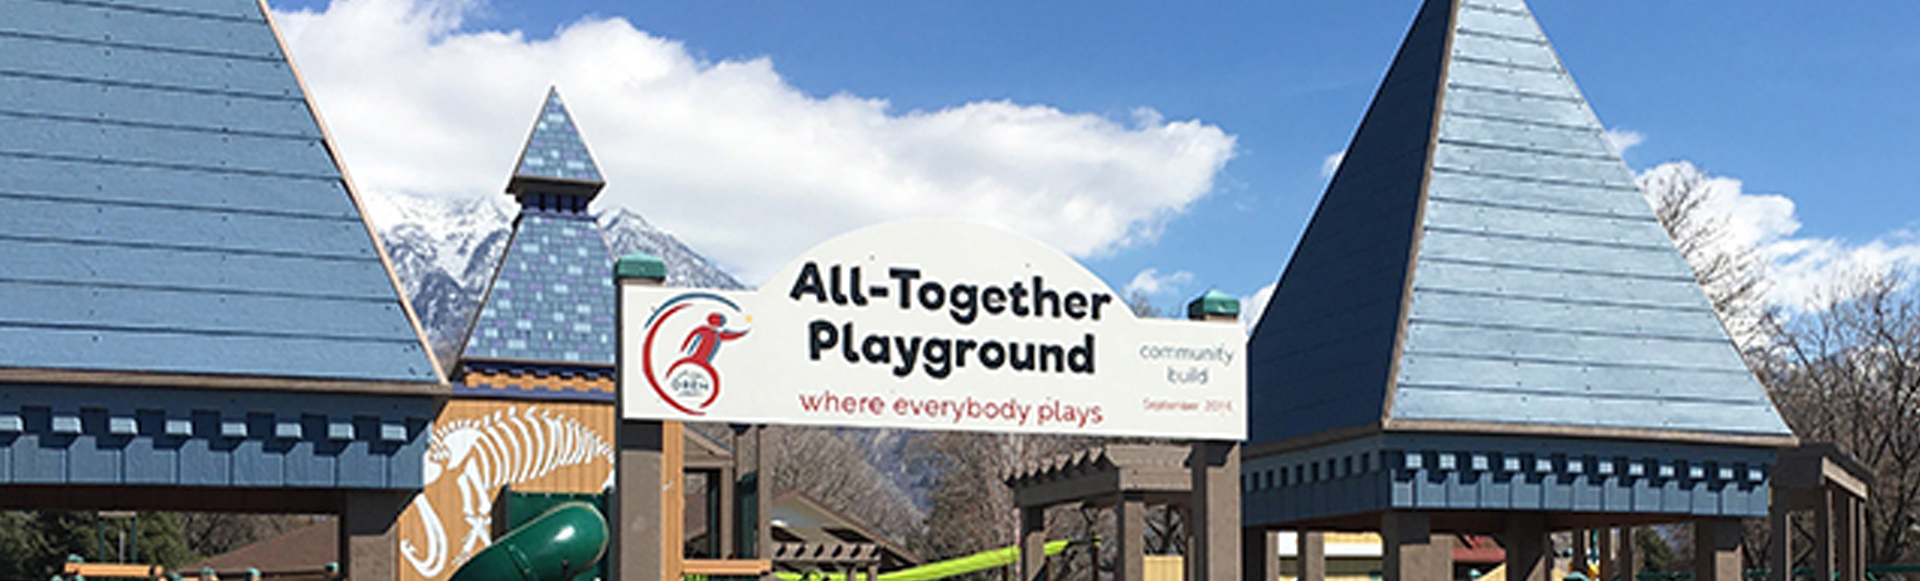 All-abilities Playground Built Through Community Effort in Partner City Orem, Utah